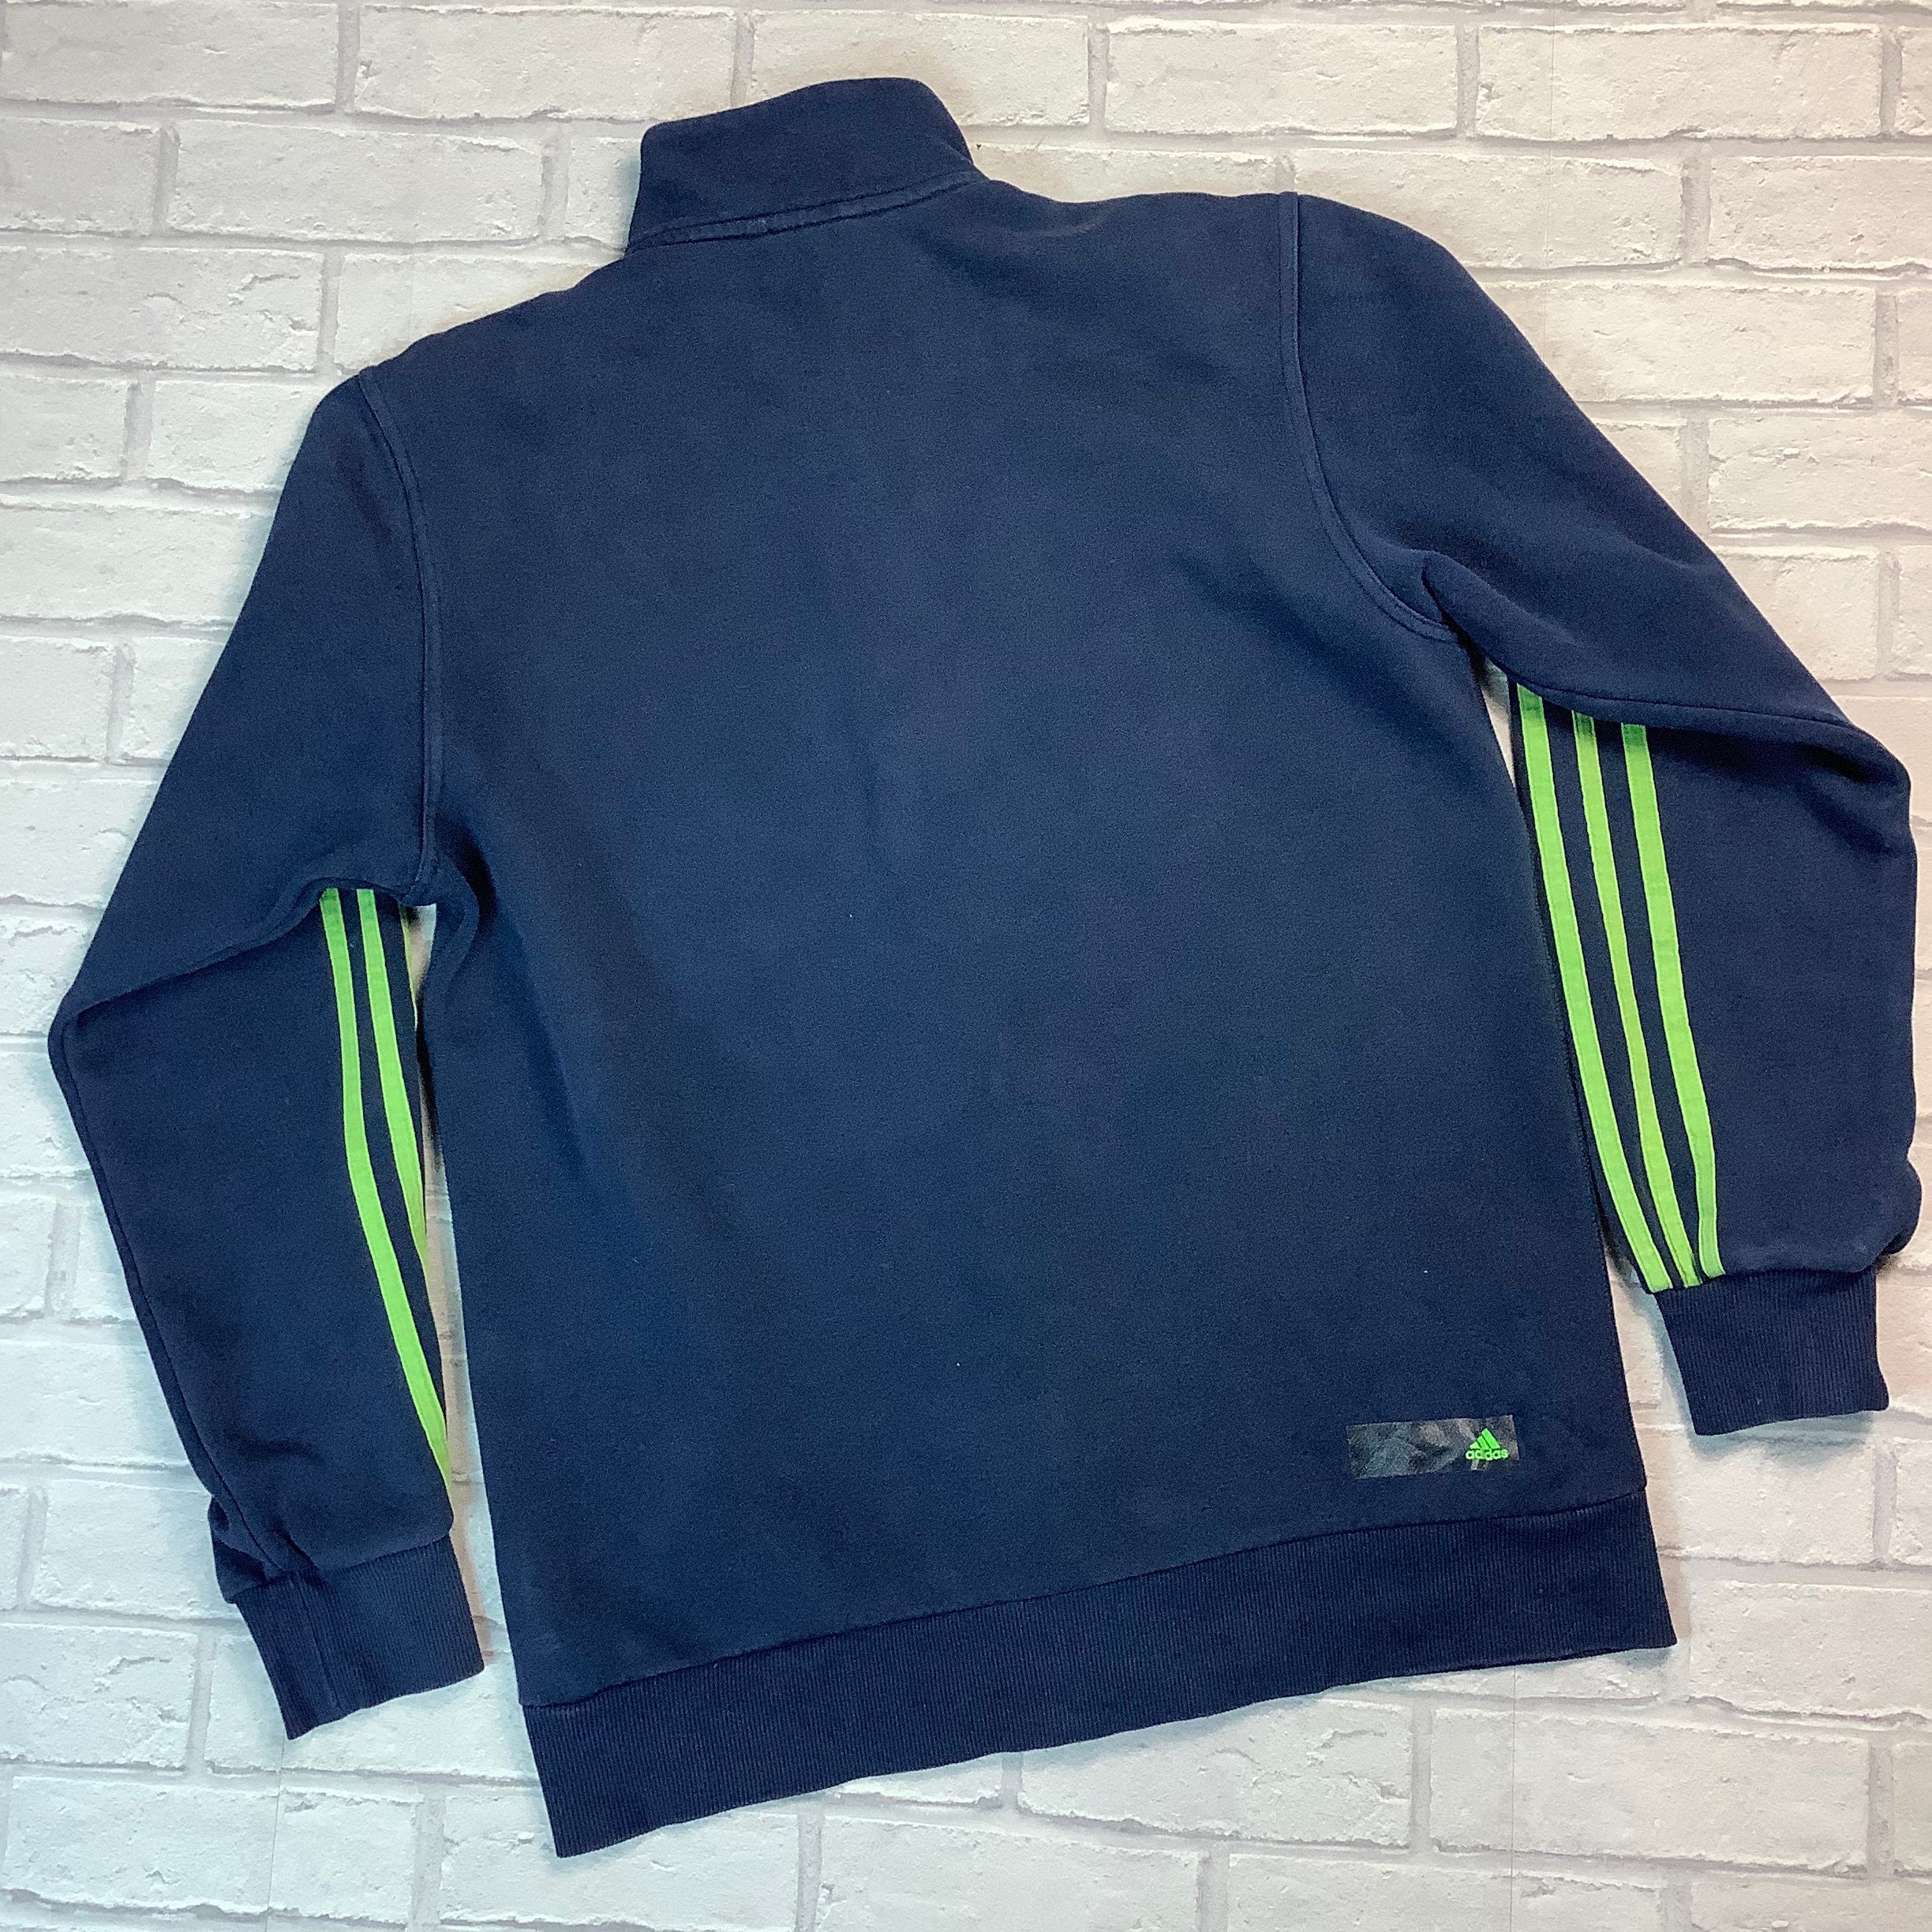 Vintage Adidas full zip jacket | Etsy